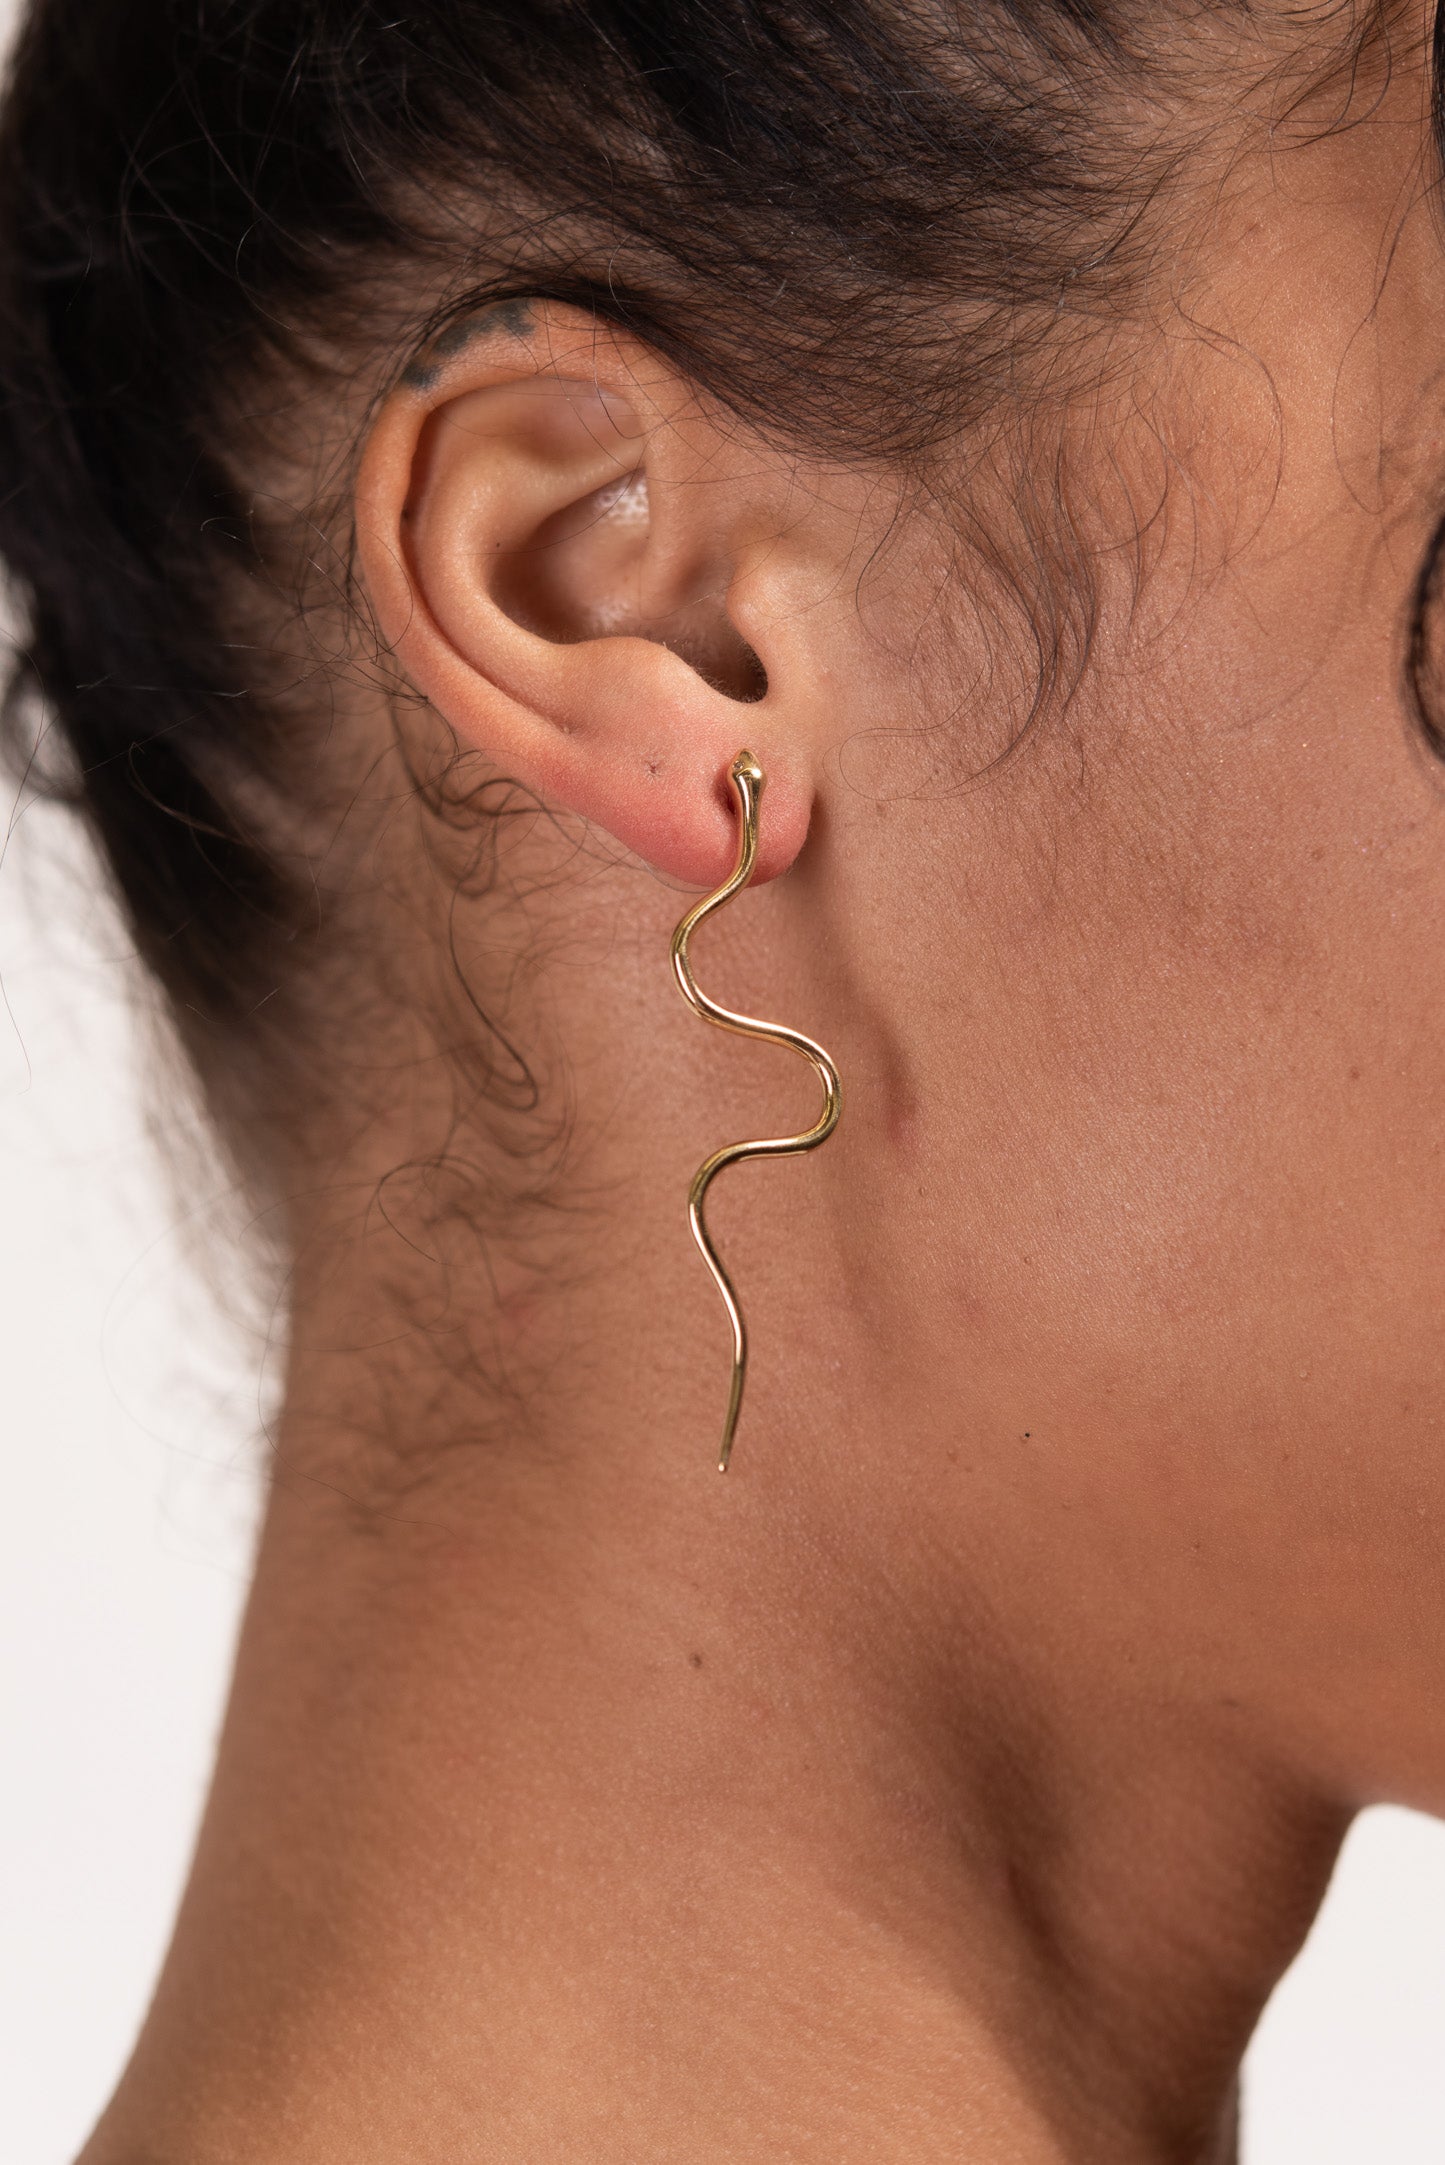 Gold Dipped Sterling Silver Snake Stud Earrings - Gold